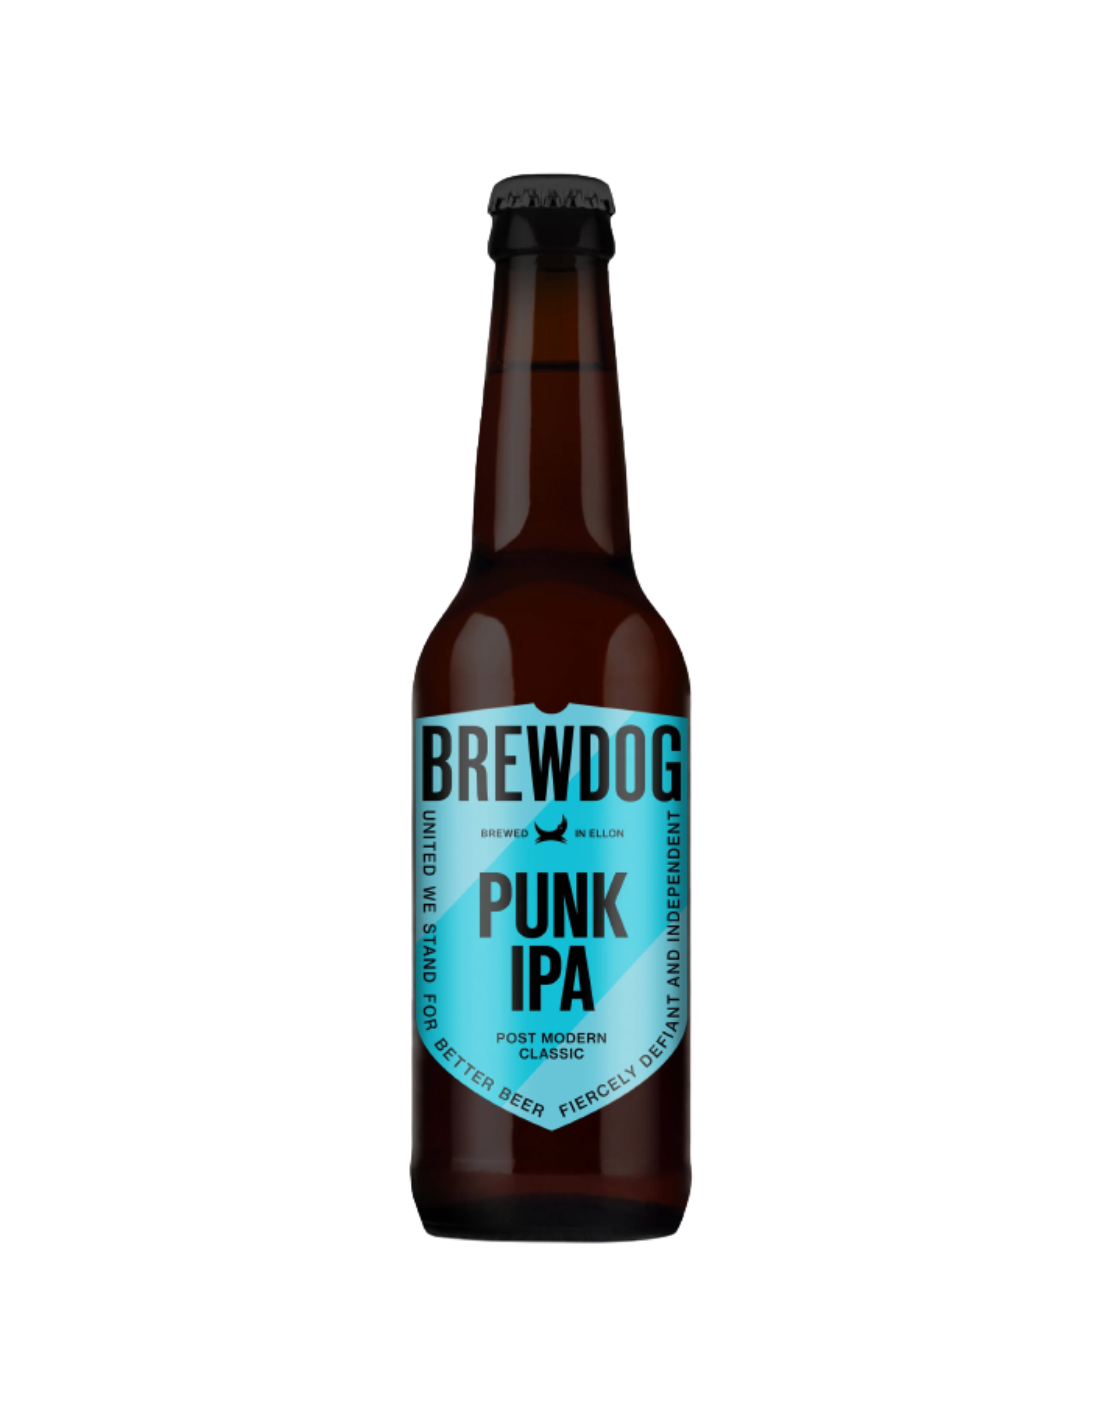 Bere blonda, artizanala BrewDog Punk IPA, 5.6% alc., 0.33L, Scotia alcooldiscount.ro